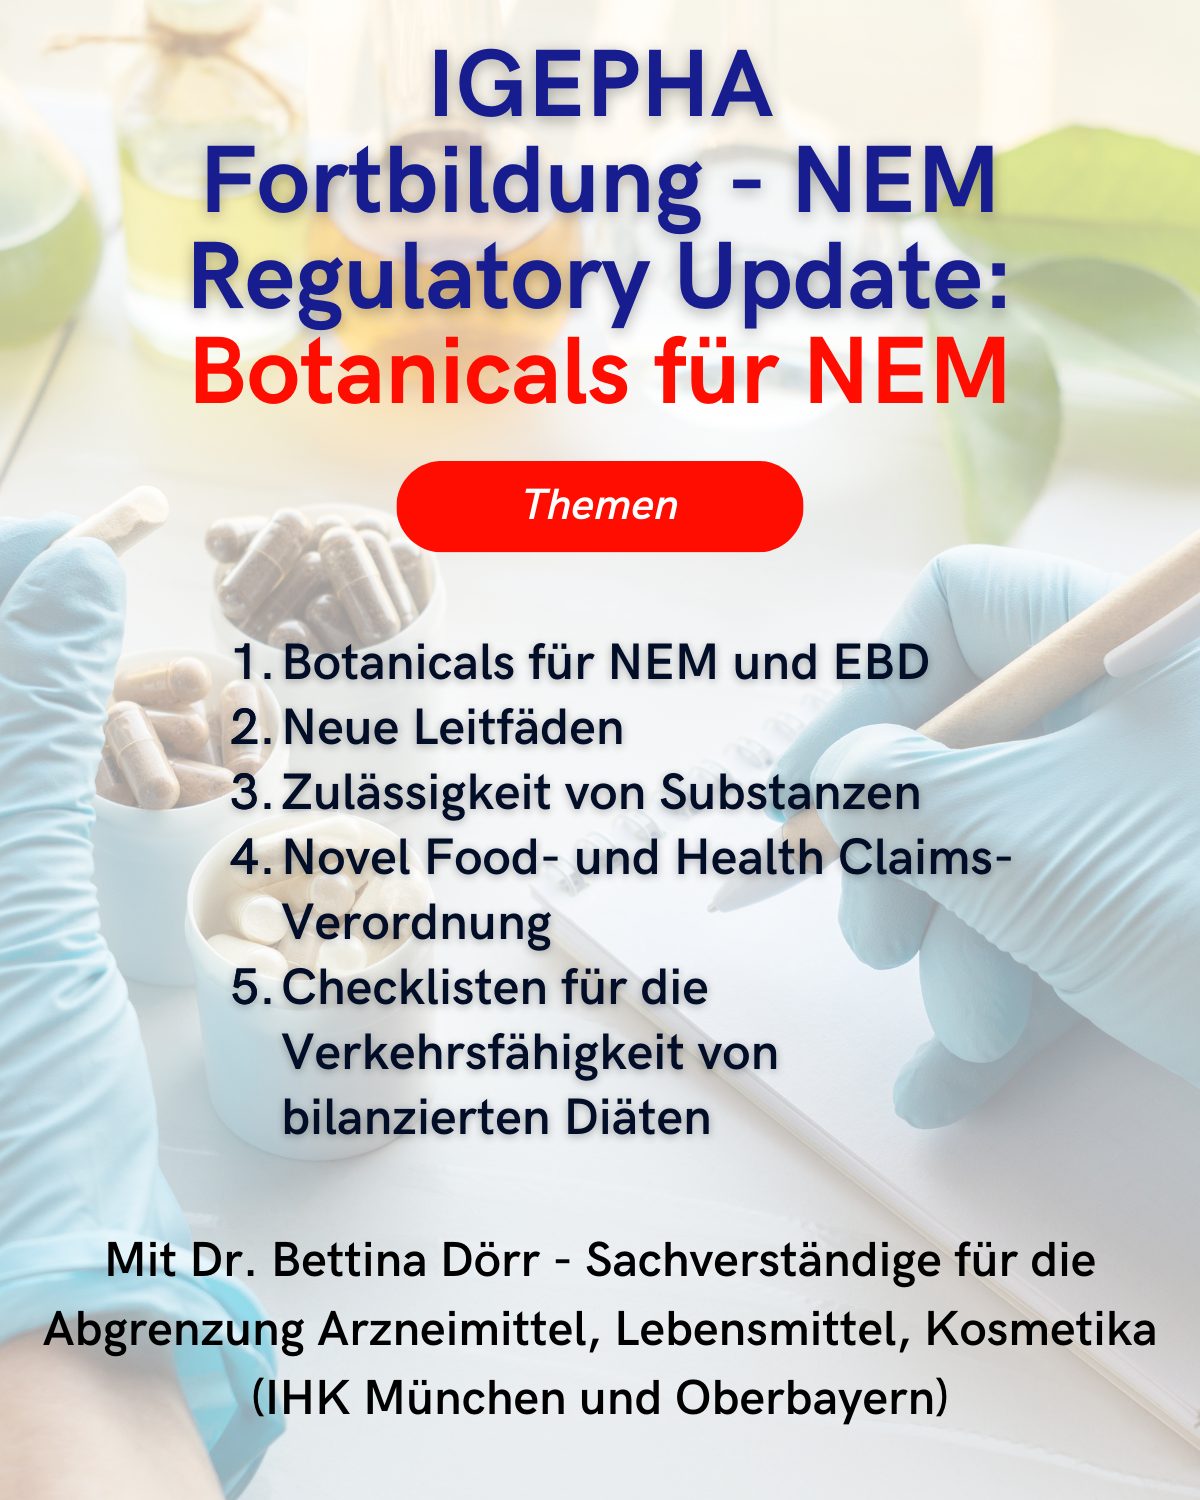 igepha video NEM Regulatory Update Botanicals